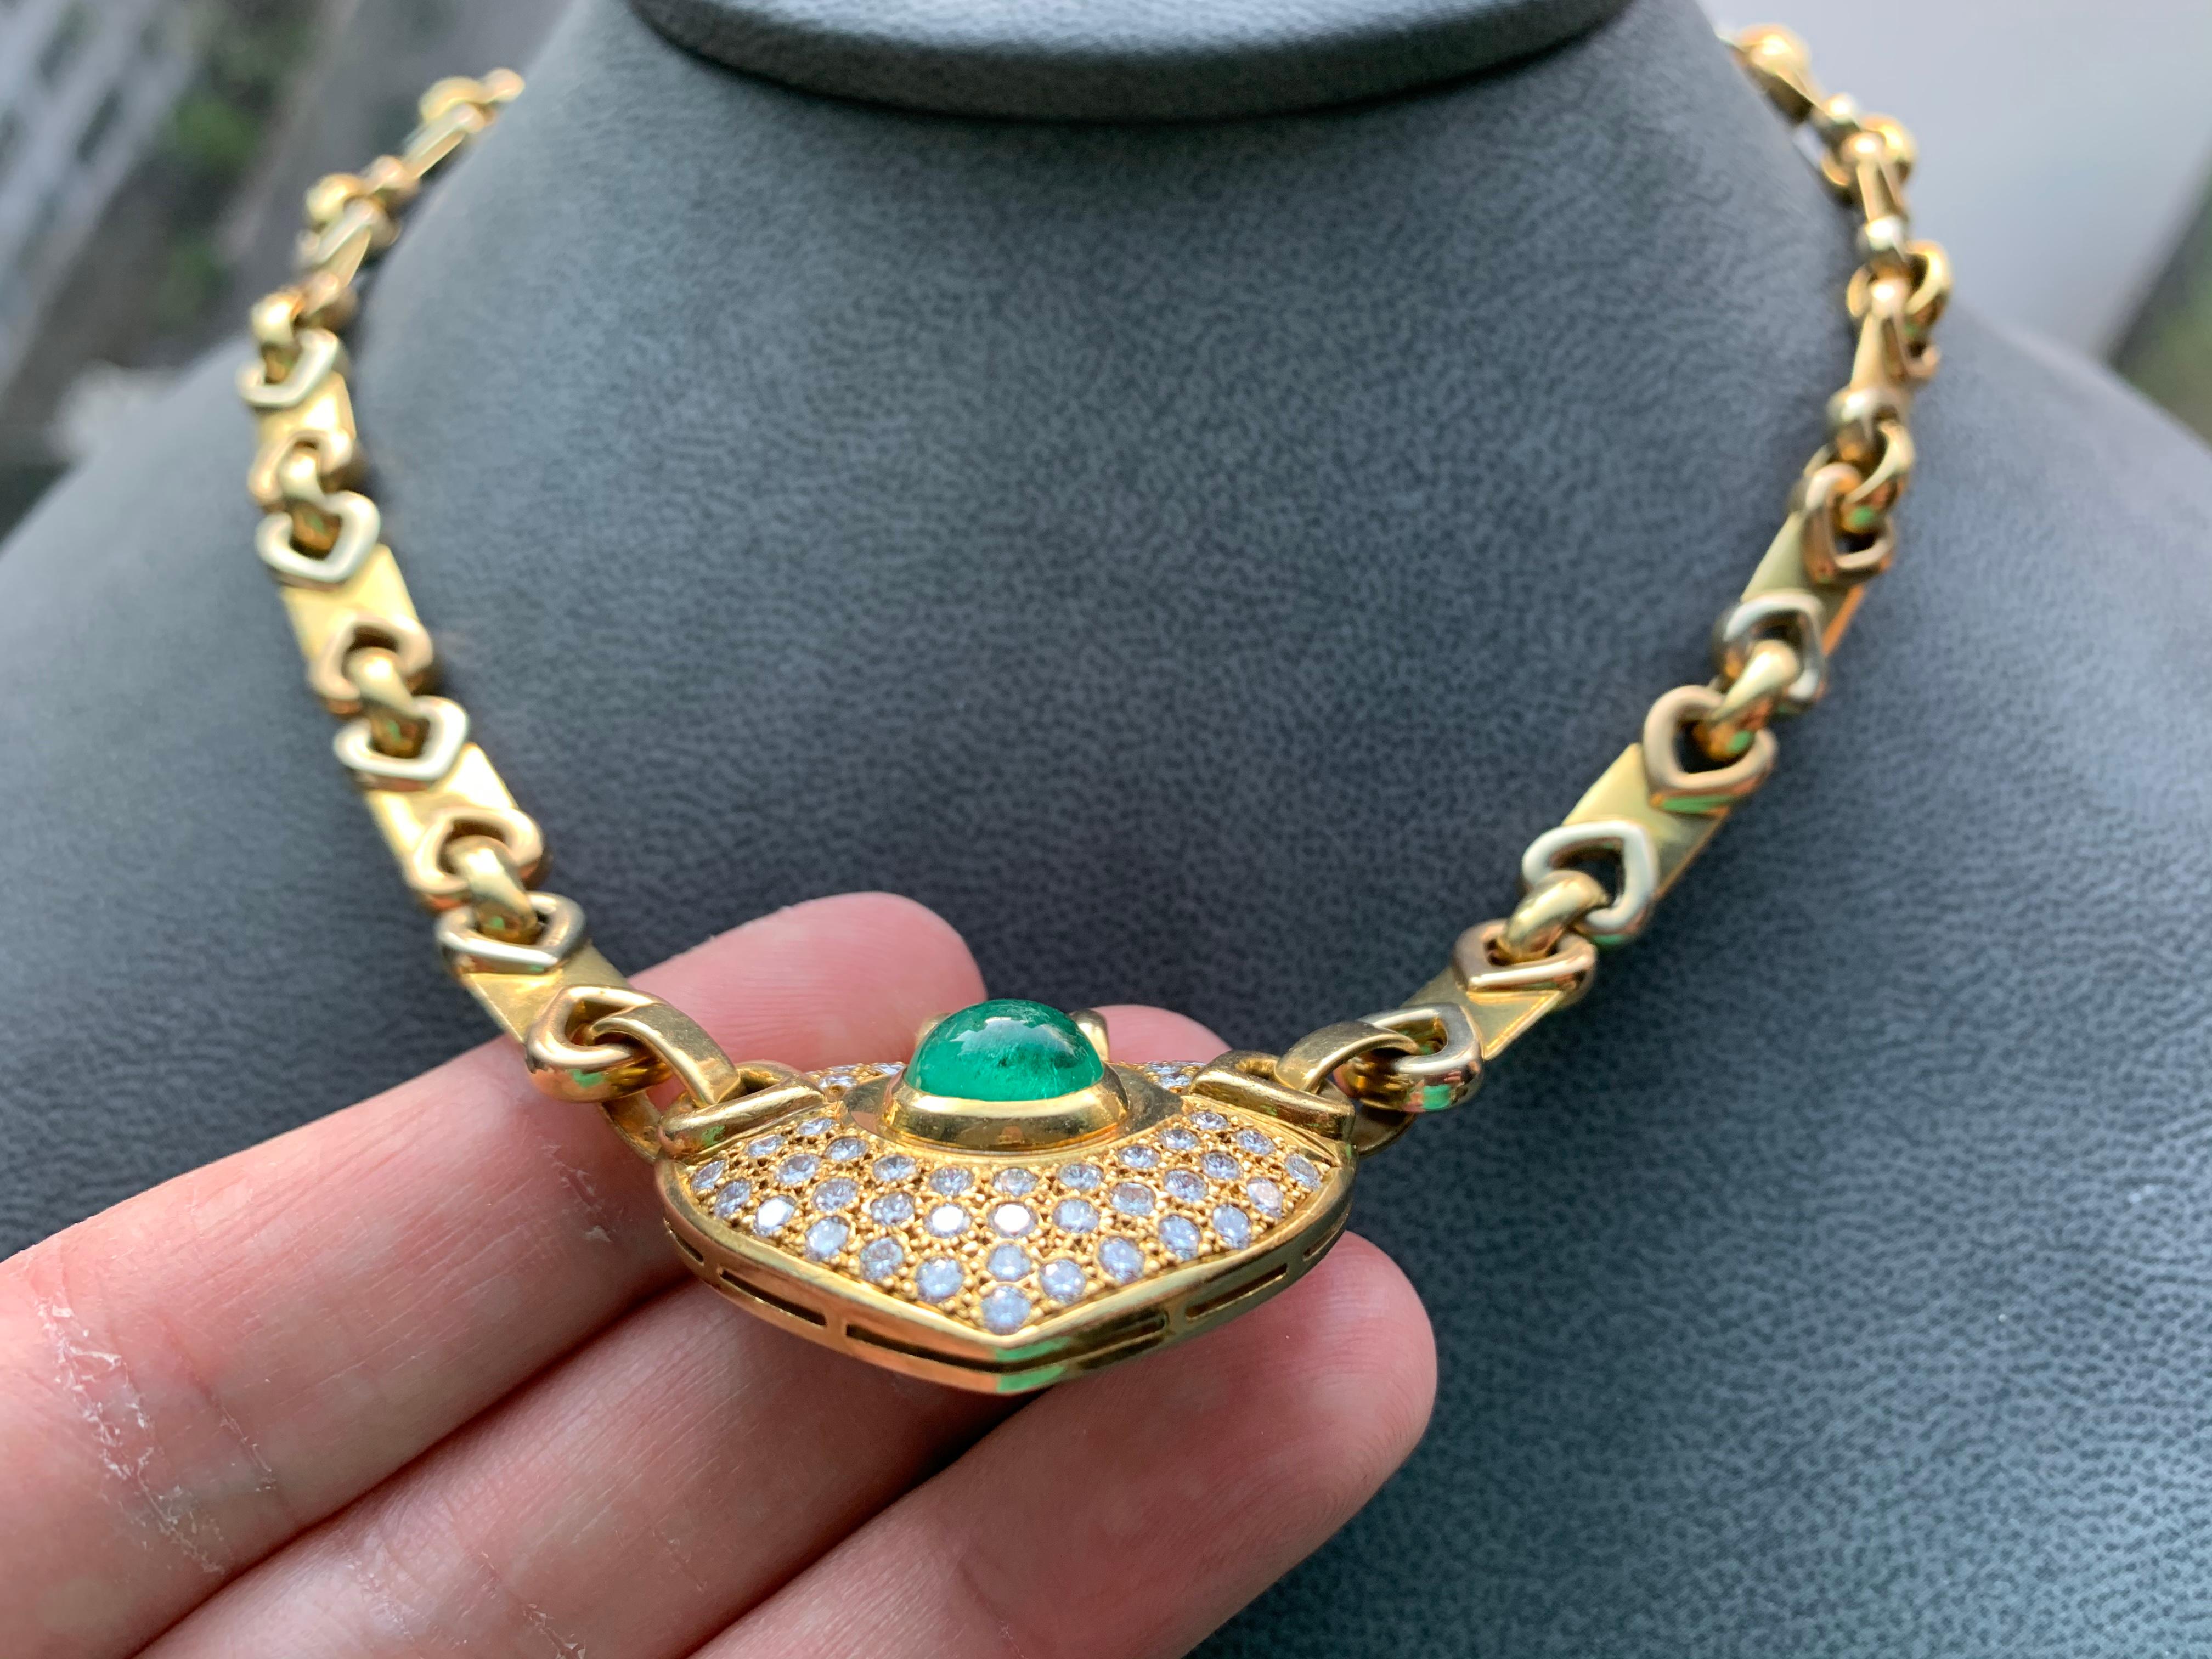 mens emerald necklace